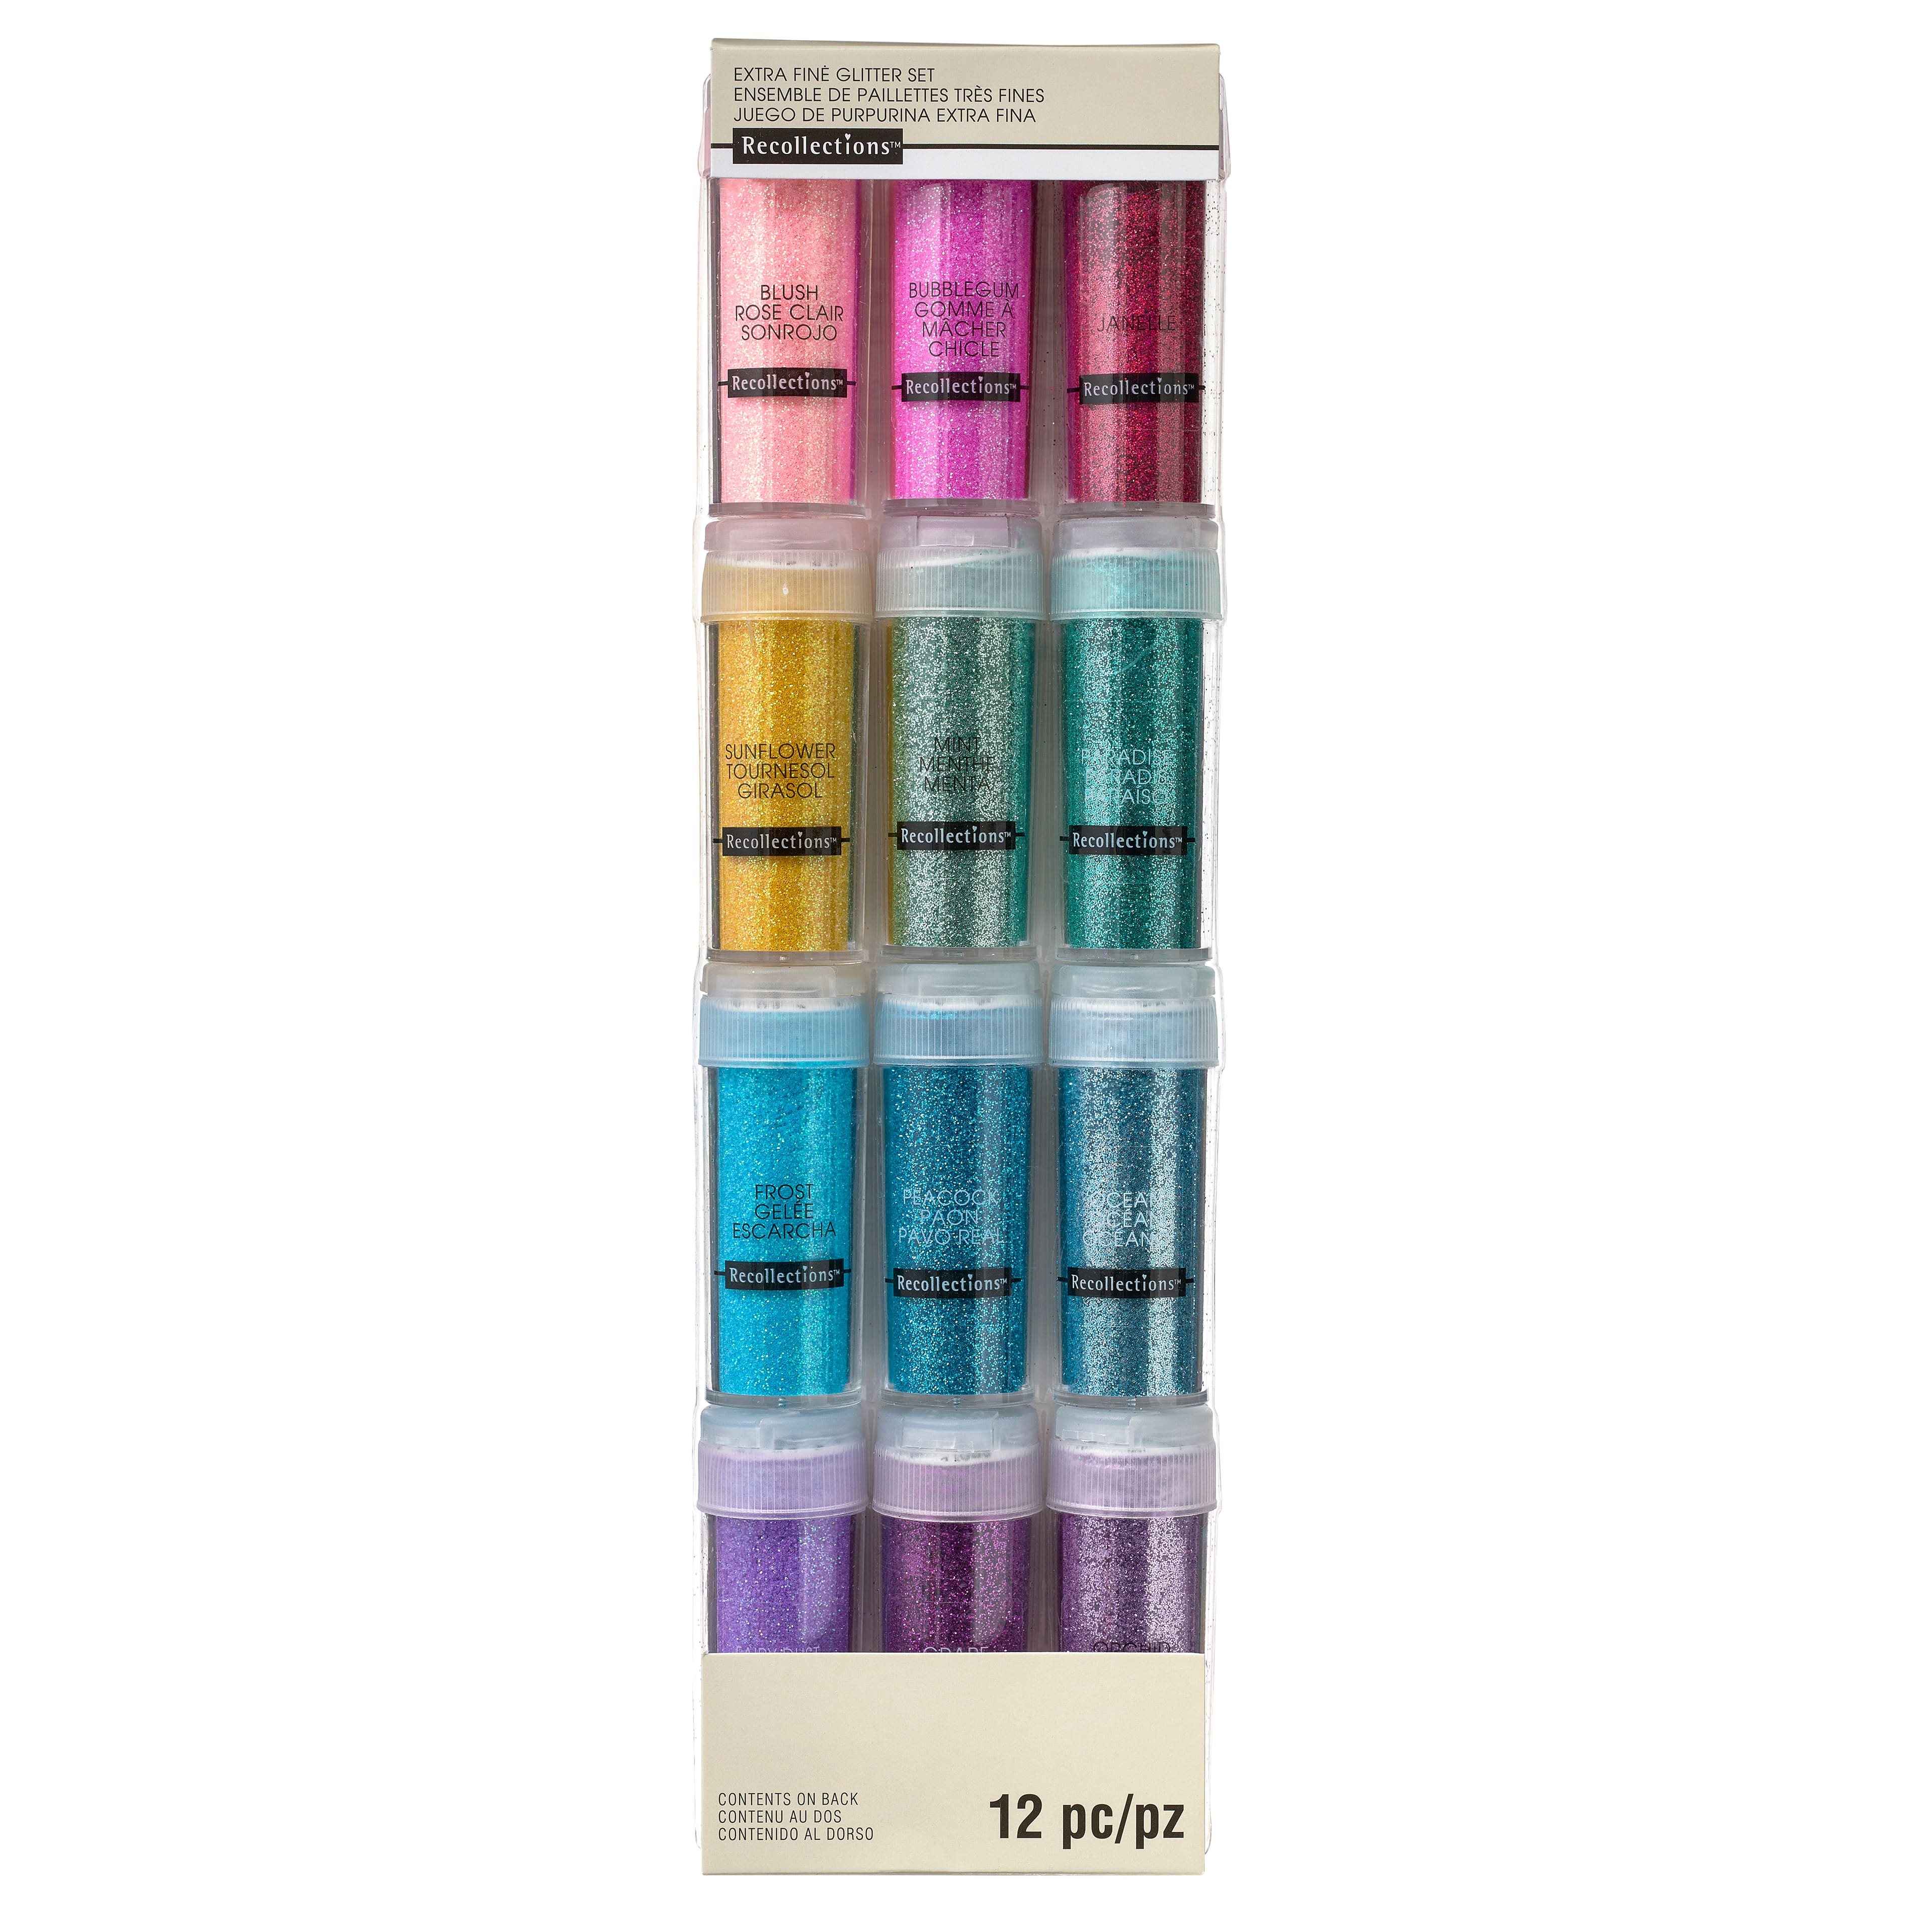 Extra Fine Glitter Set - set of 8 colors - 718813273831